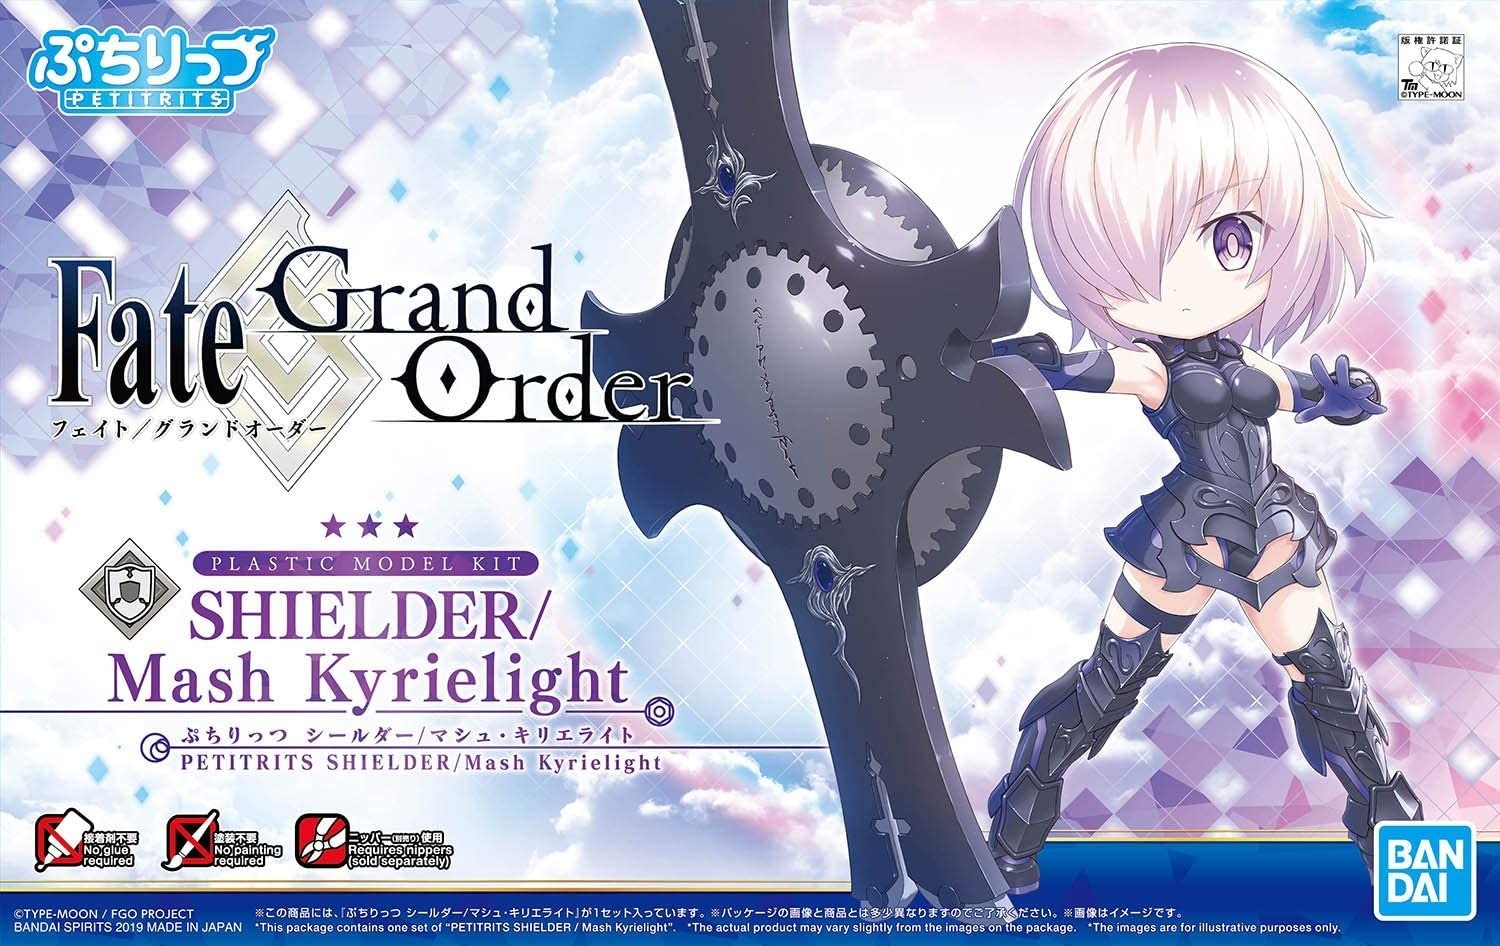 Fate/Grand Order PETITRITS SHIELDER / Mash Kyrielight - PLASTIC MODEL KIT